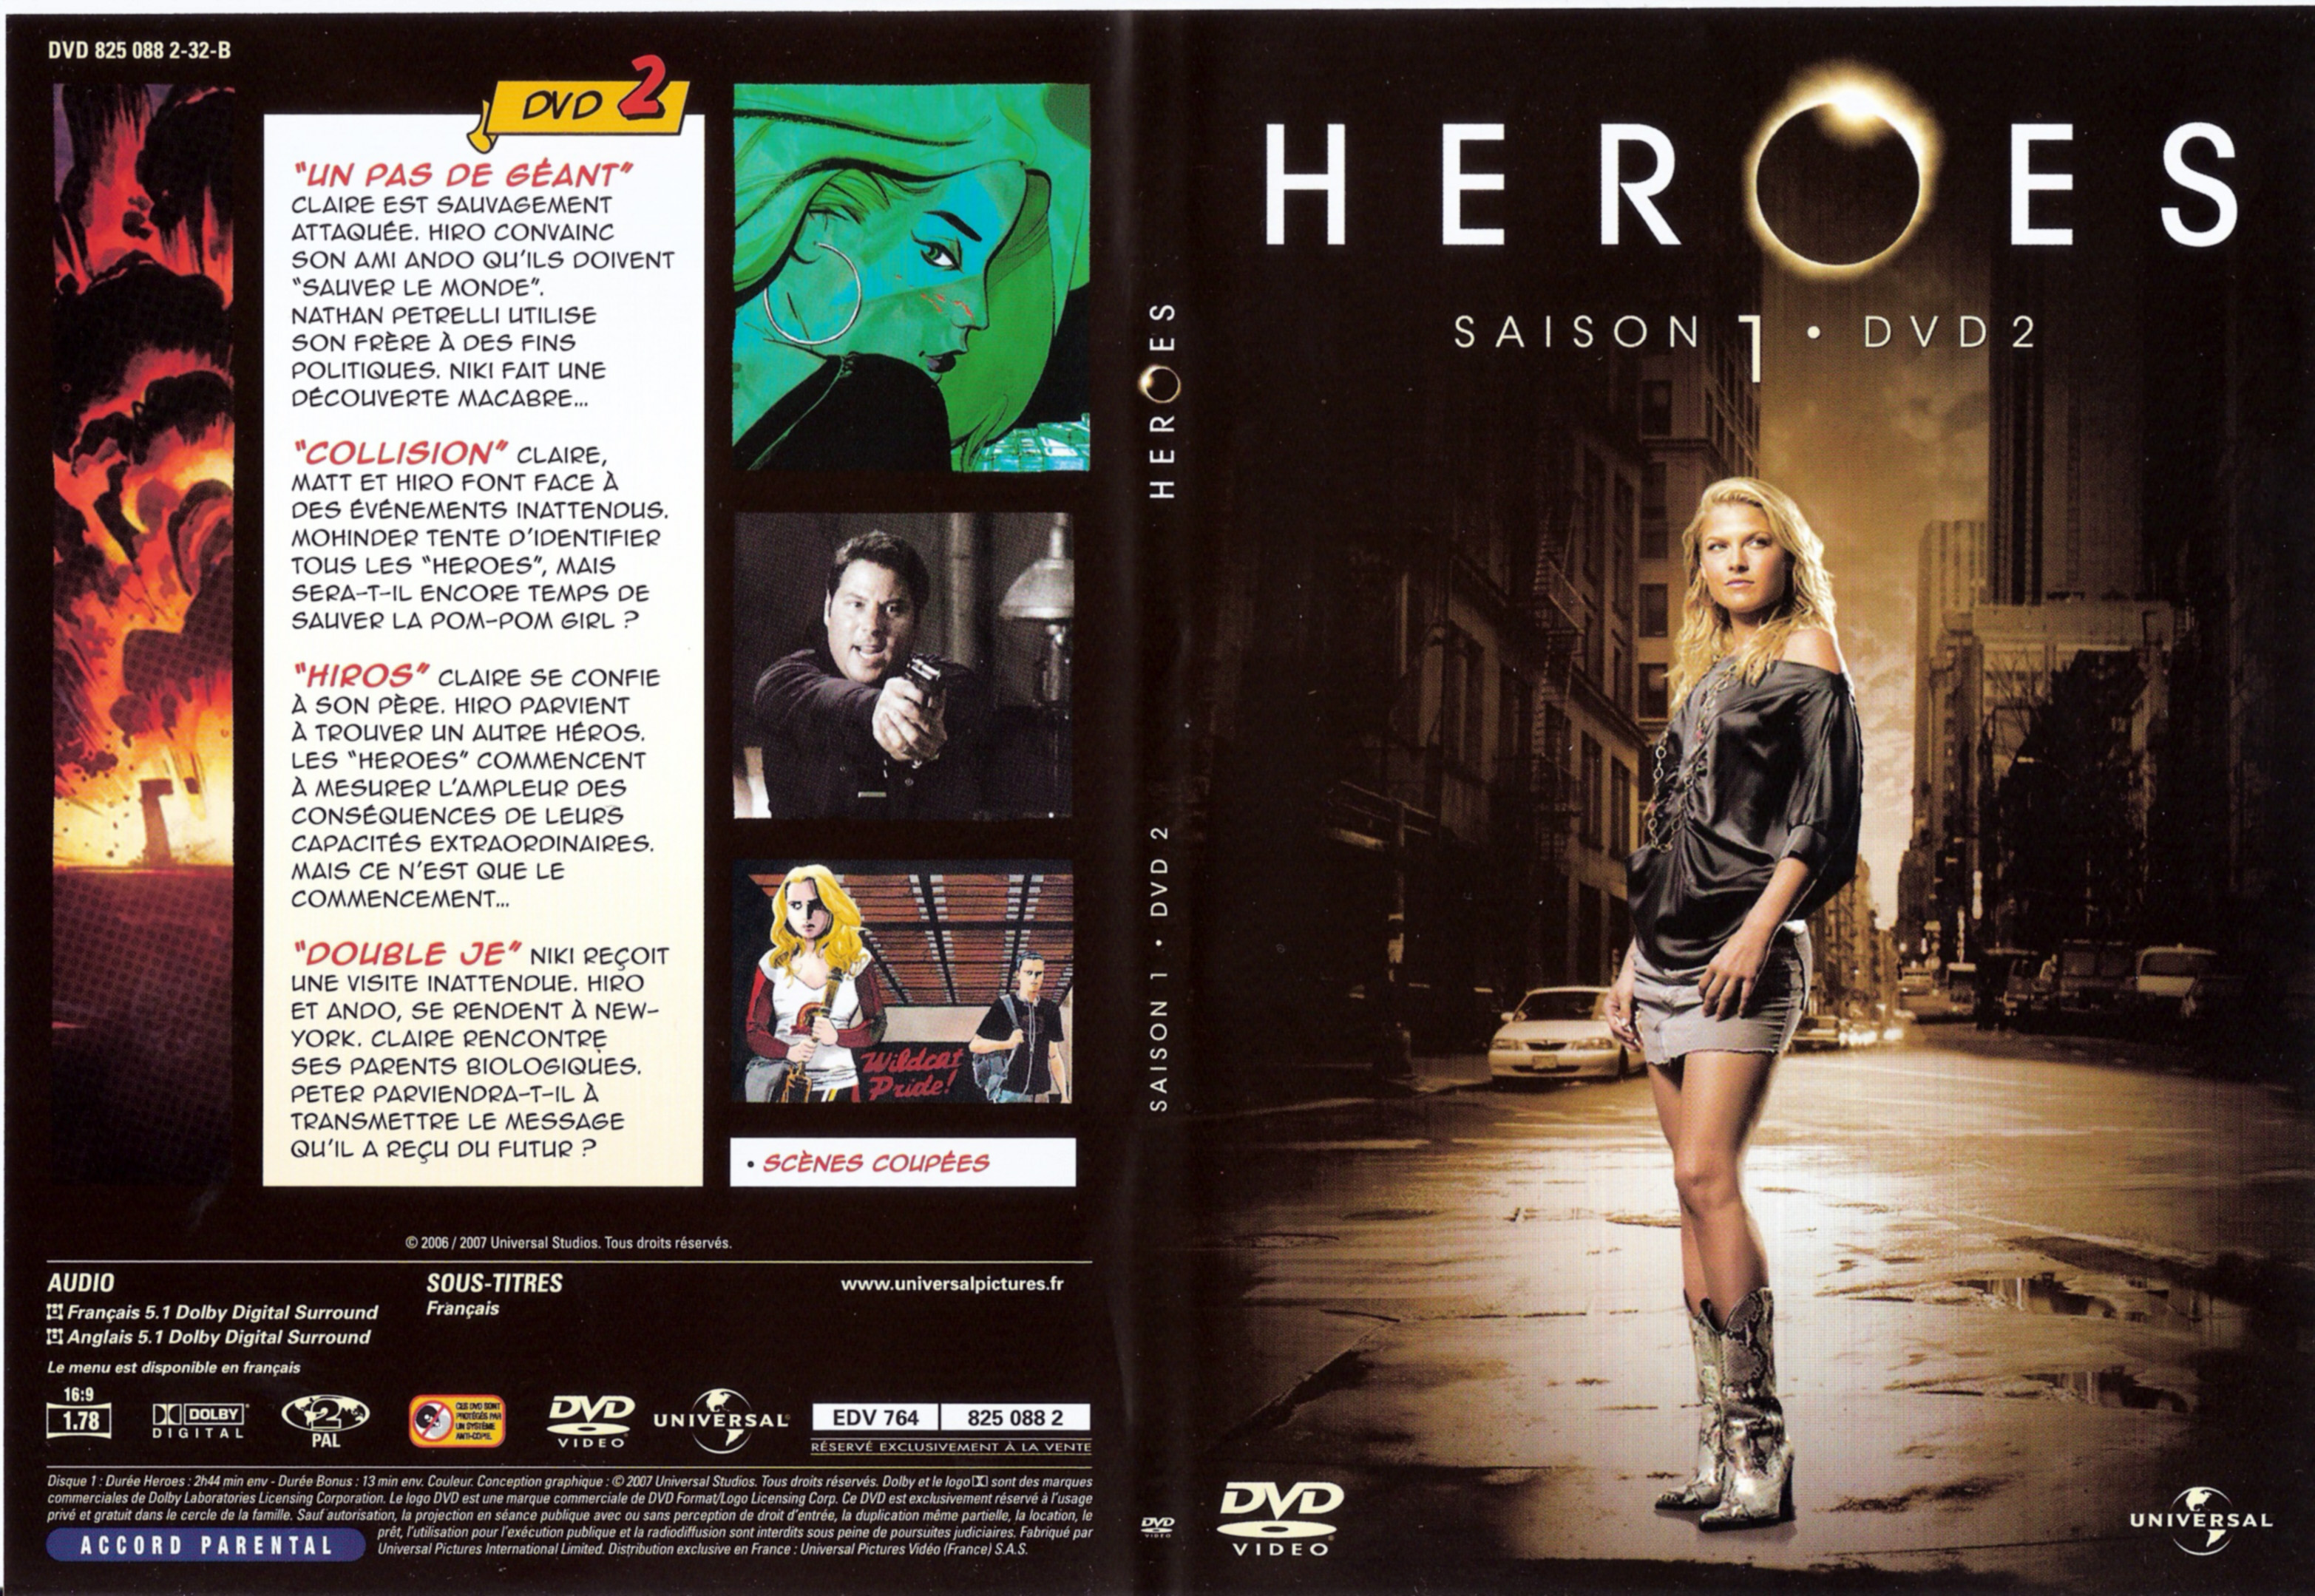 Jaquette DVD Heroes saison 1 DVD 2